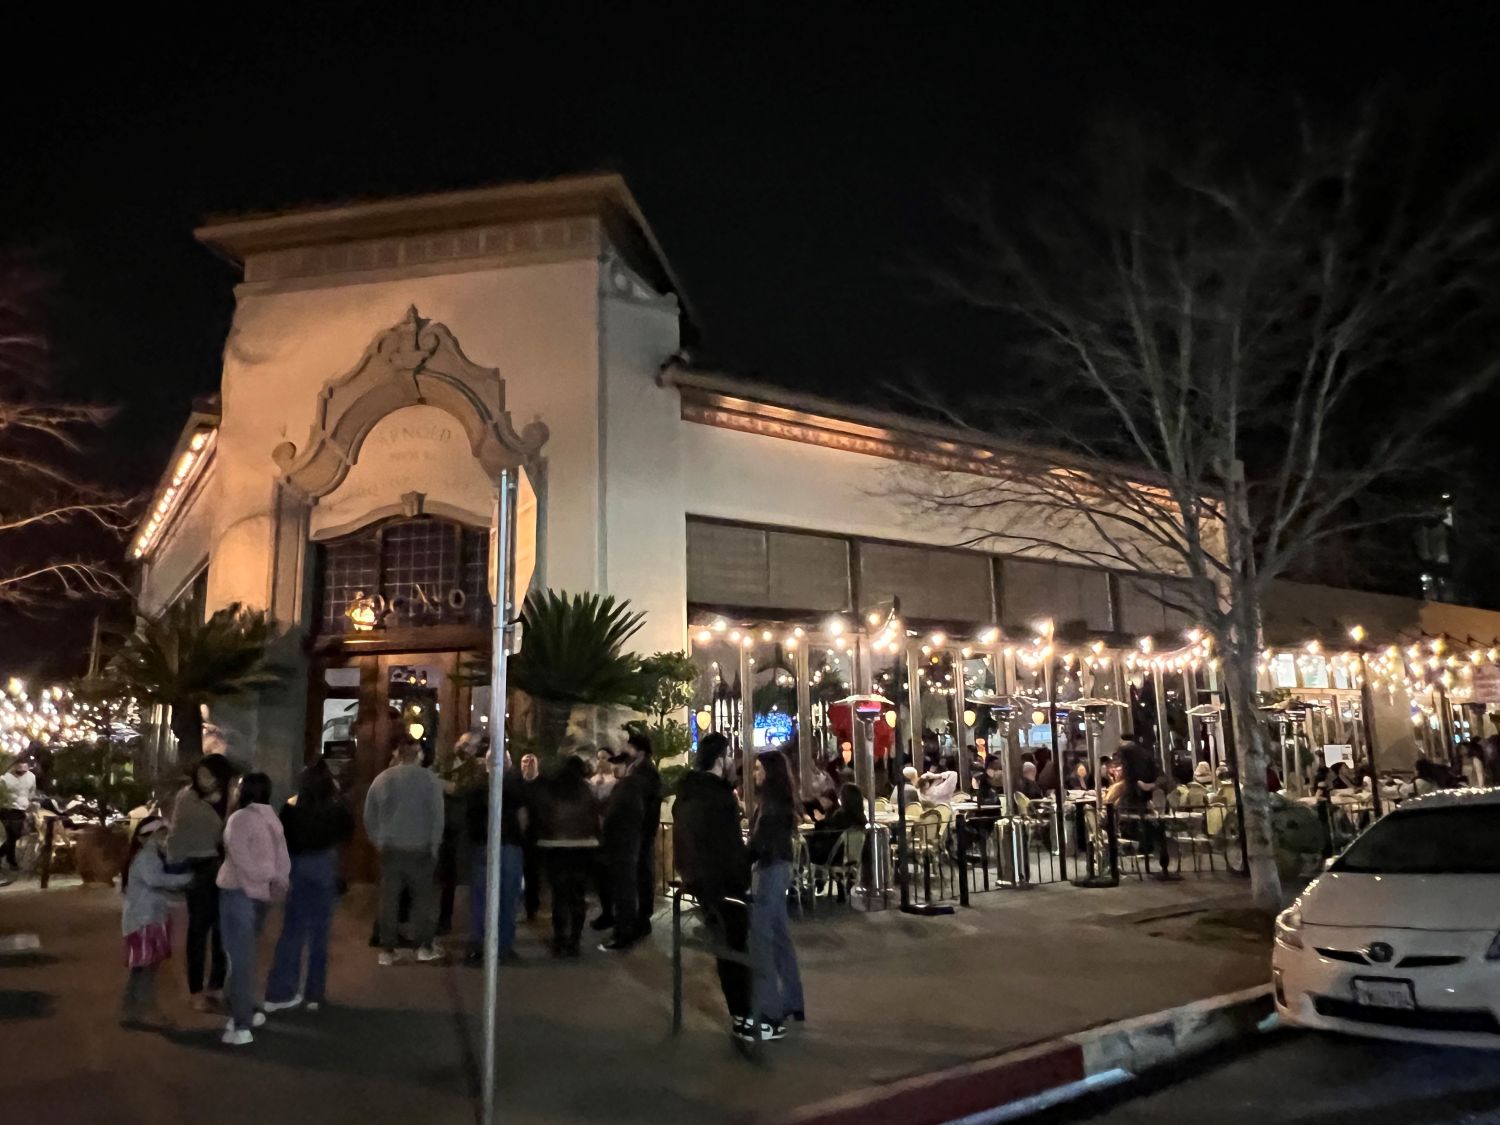 Image outside of popular Sacramento restaurant at night